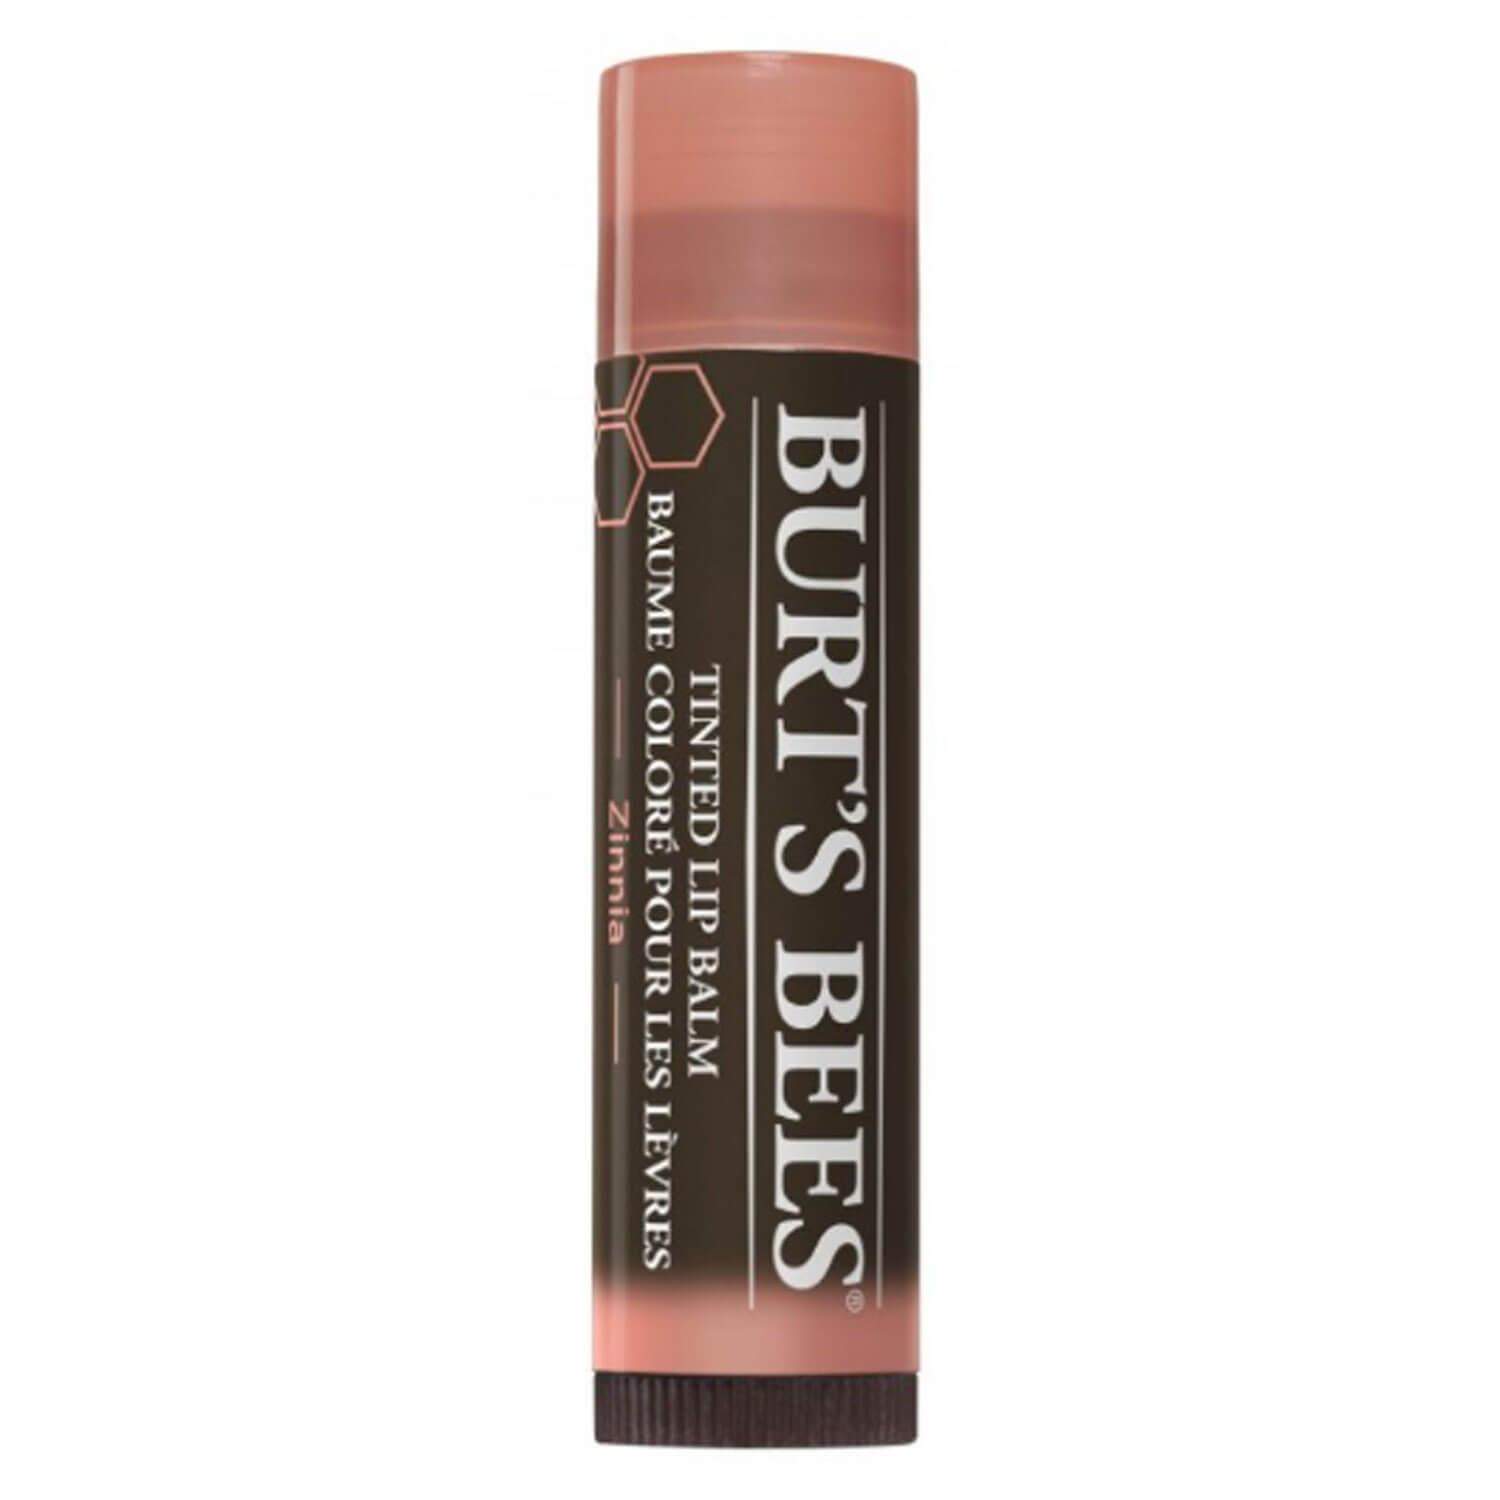 Burt's Bees - Tinted Lip Balm Zinnia